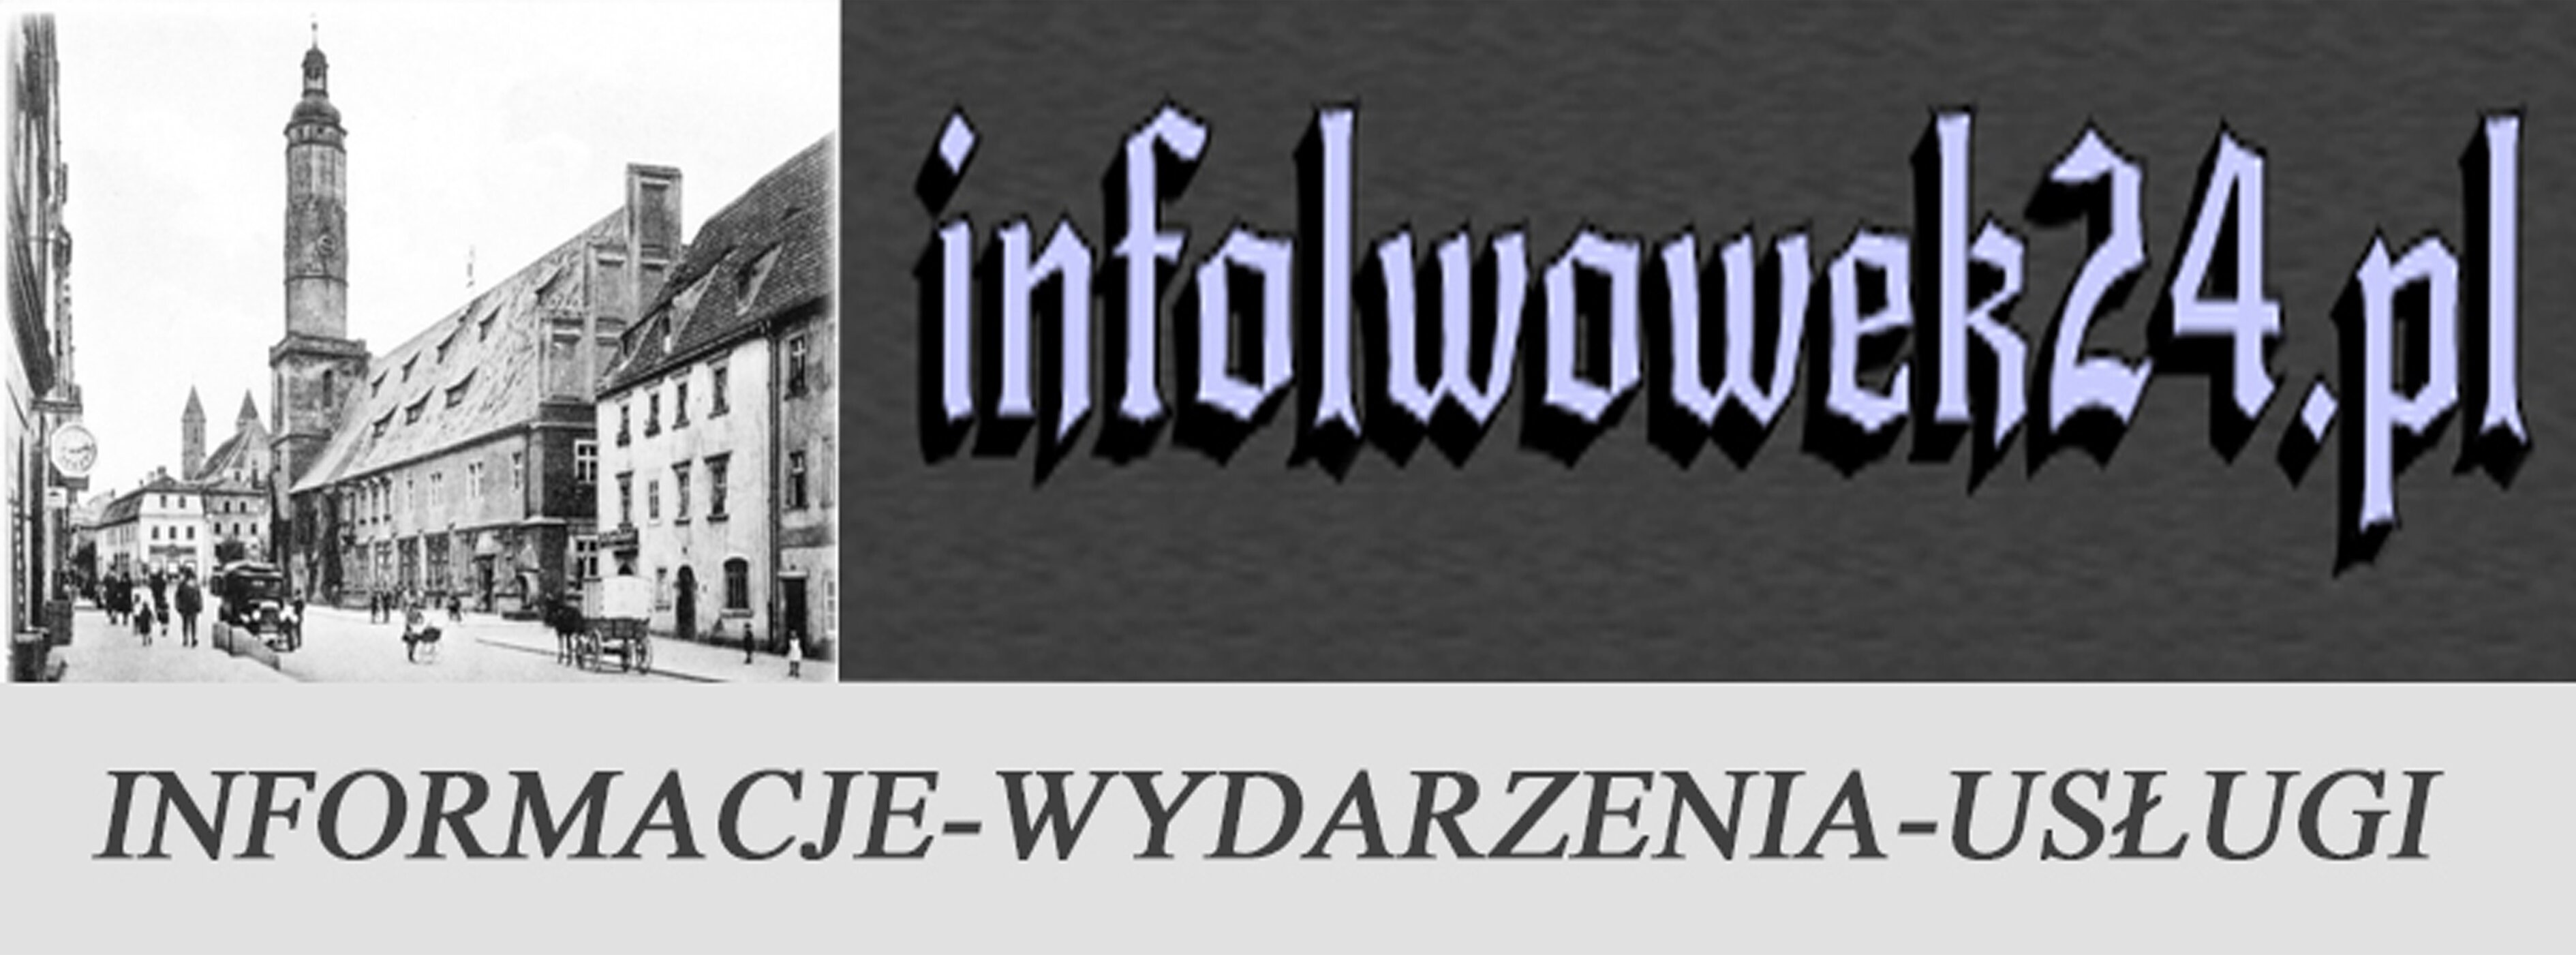  infolwowek24.pl